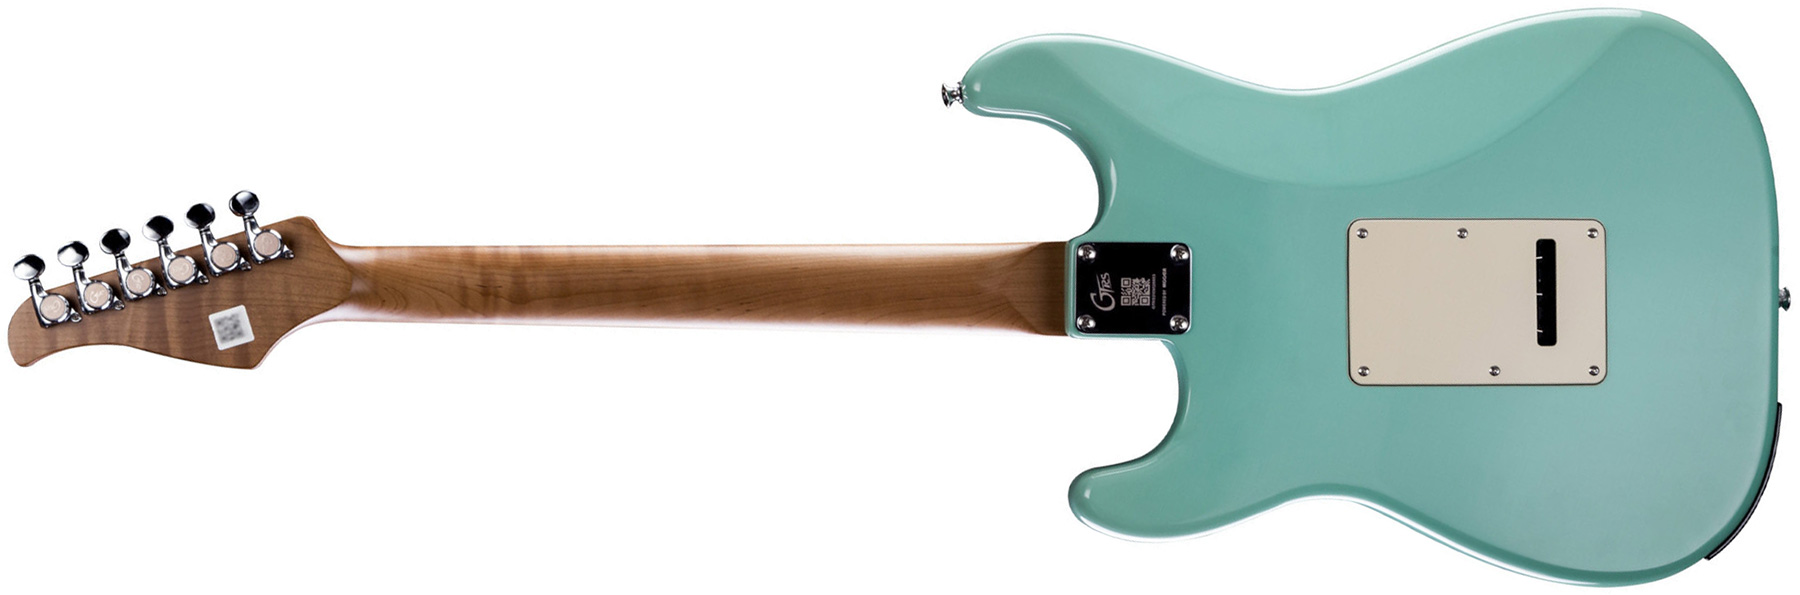 Mooer Gtrs P800 Pro Intelligent Guitar Hss Trem Rw - Mint Green - Guitarra eléctrica de modelización - Variation 1